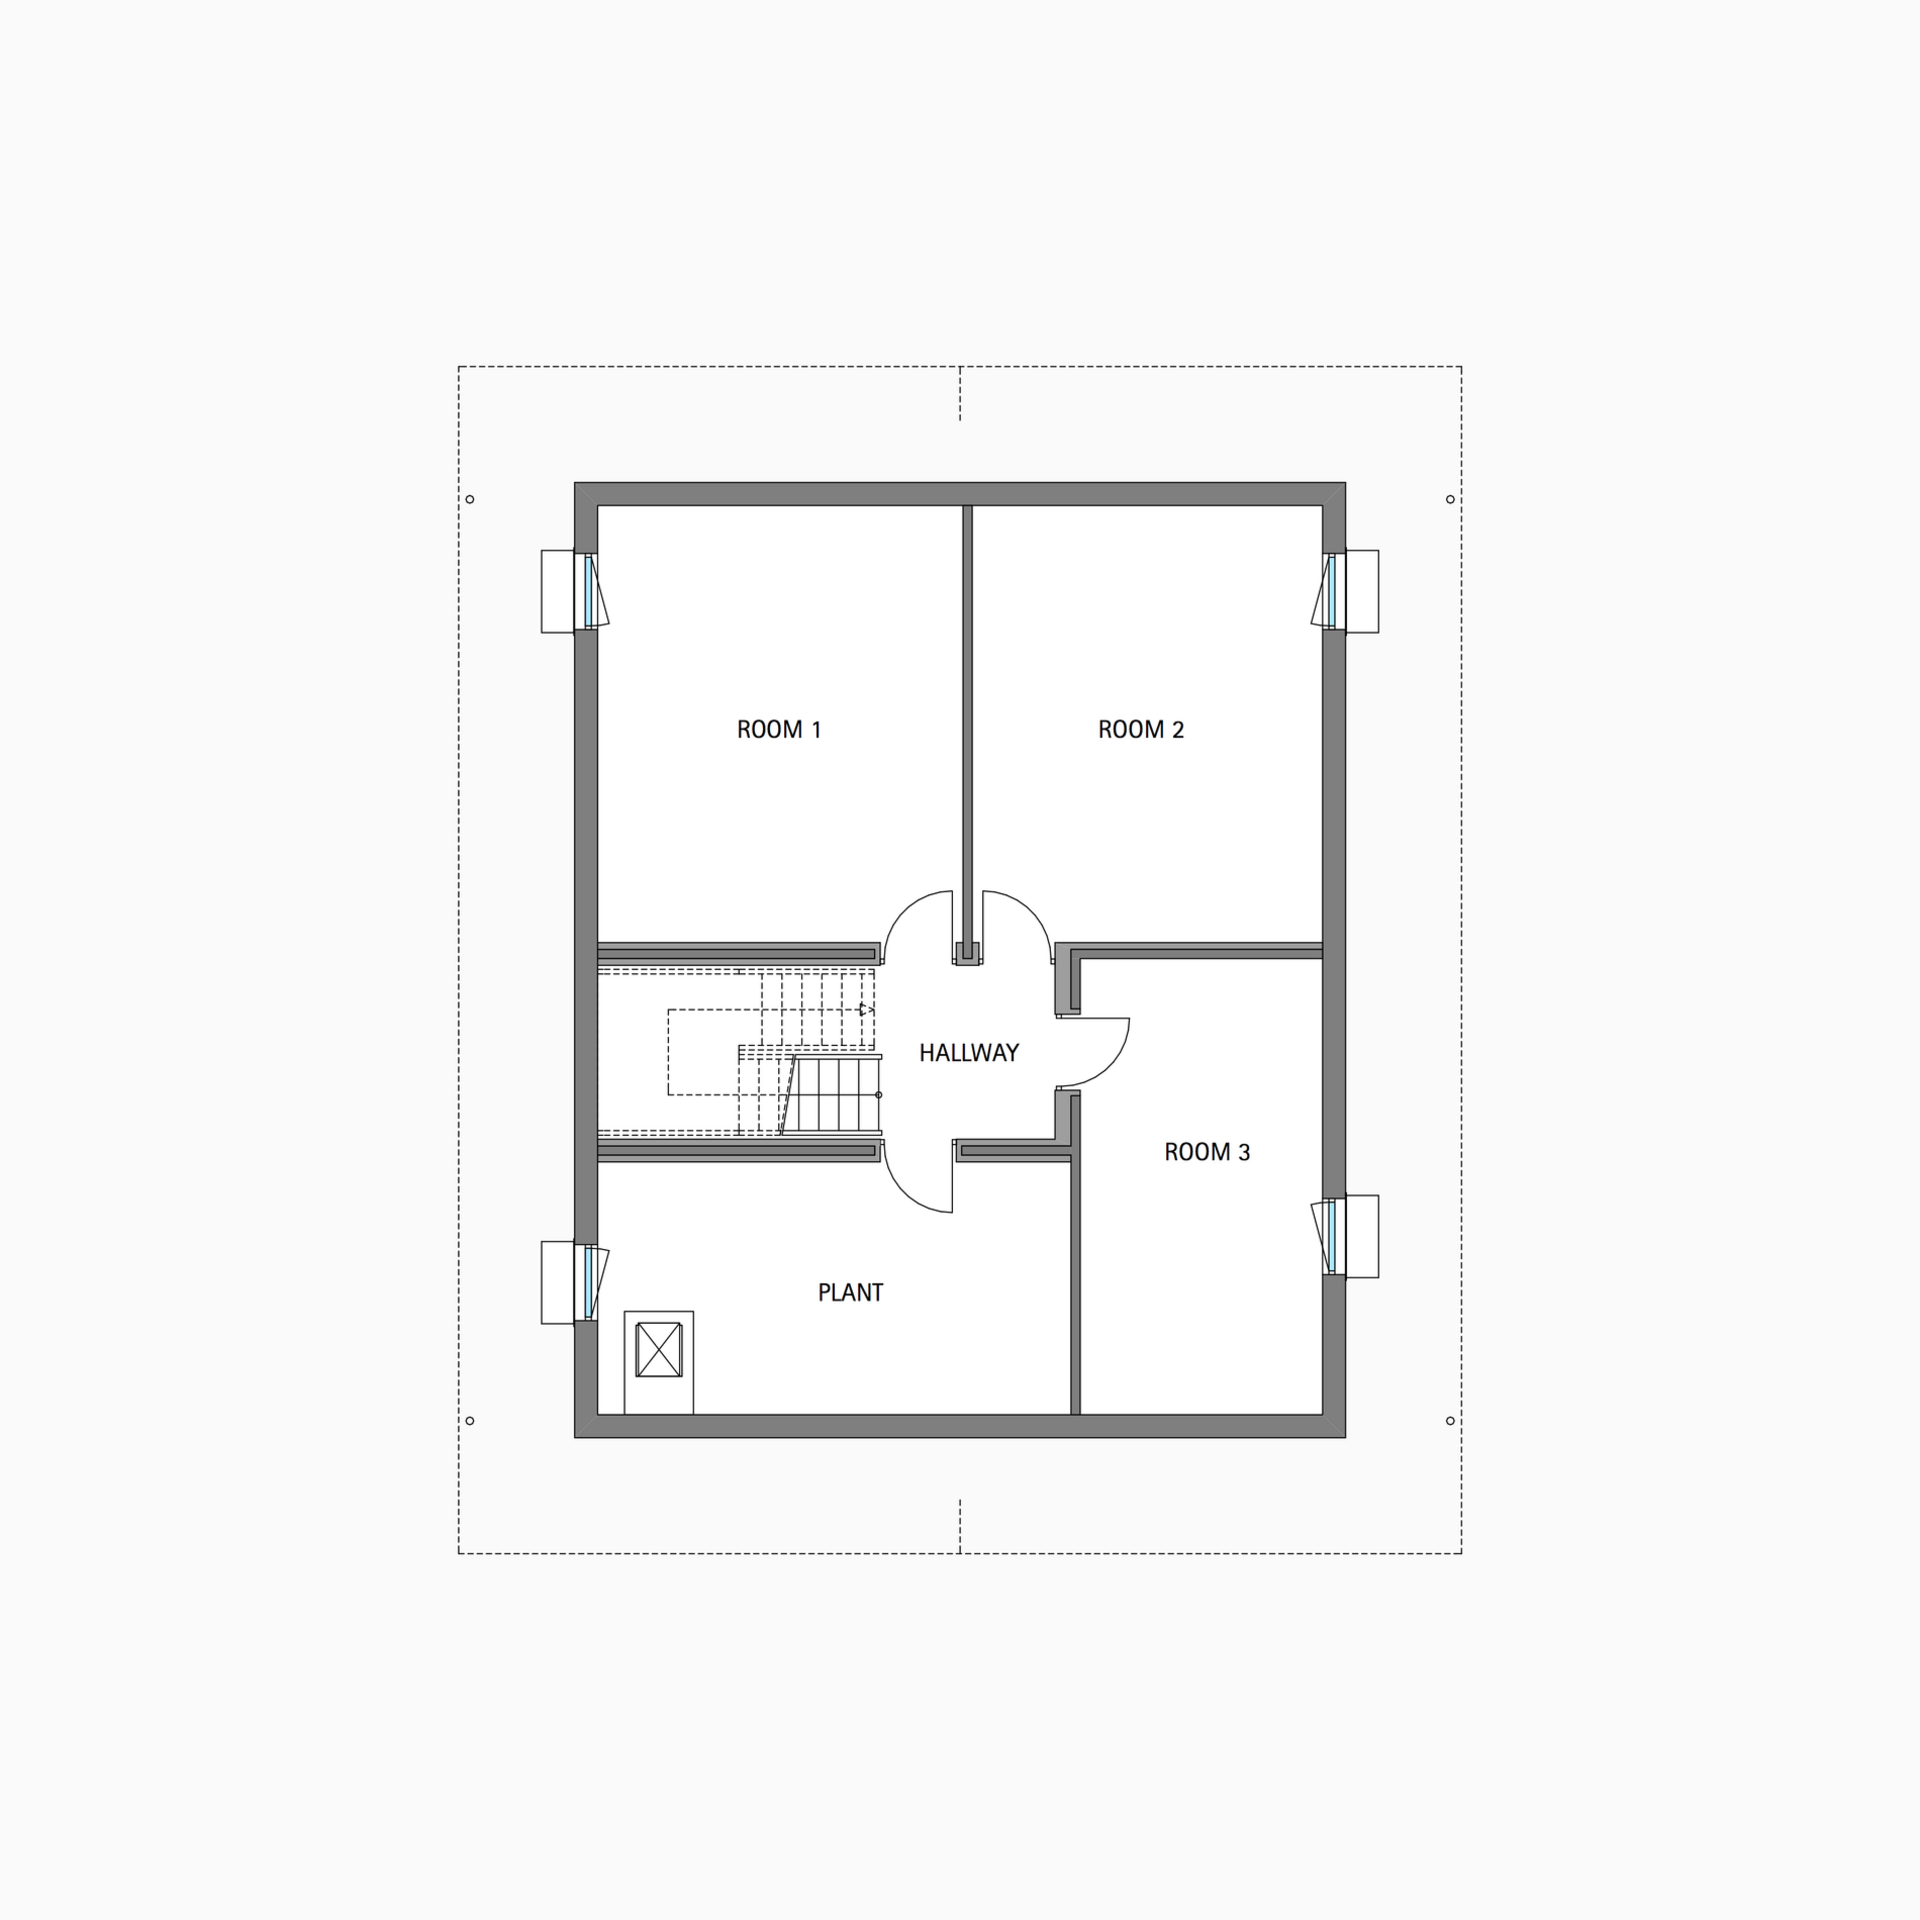 HUF house floor plan basement MODUM 8:10